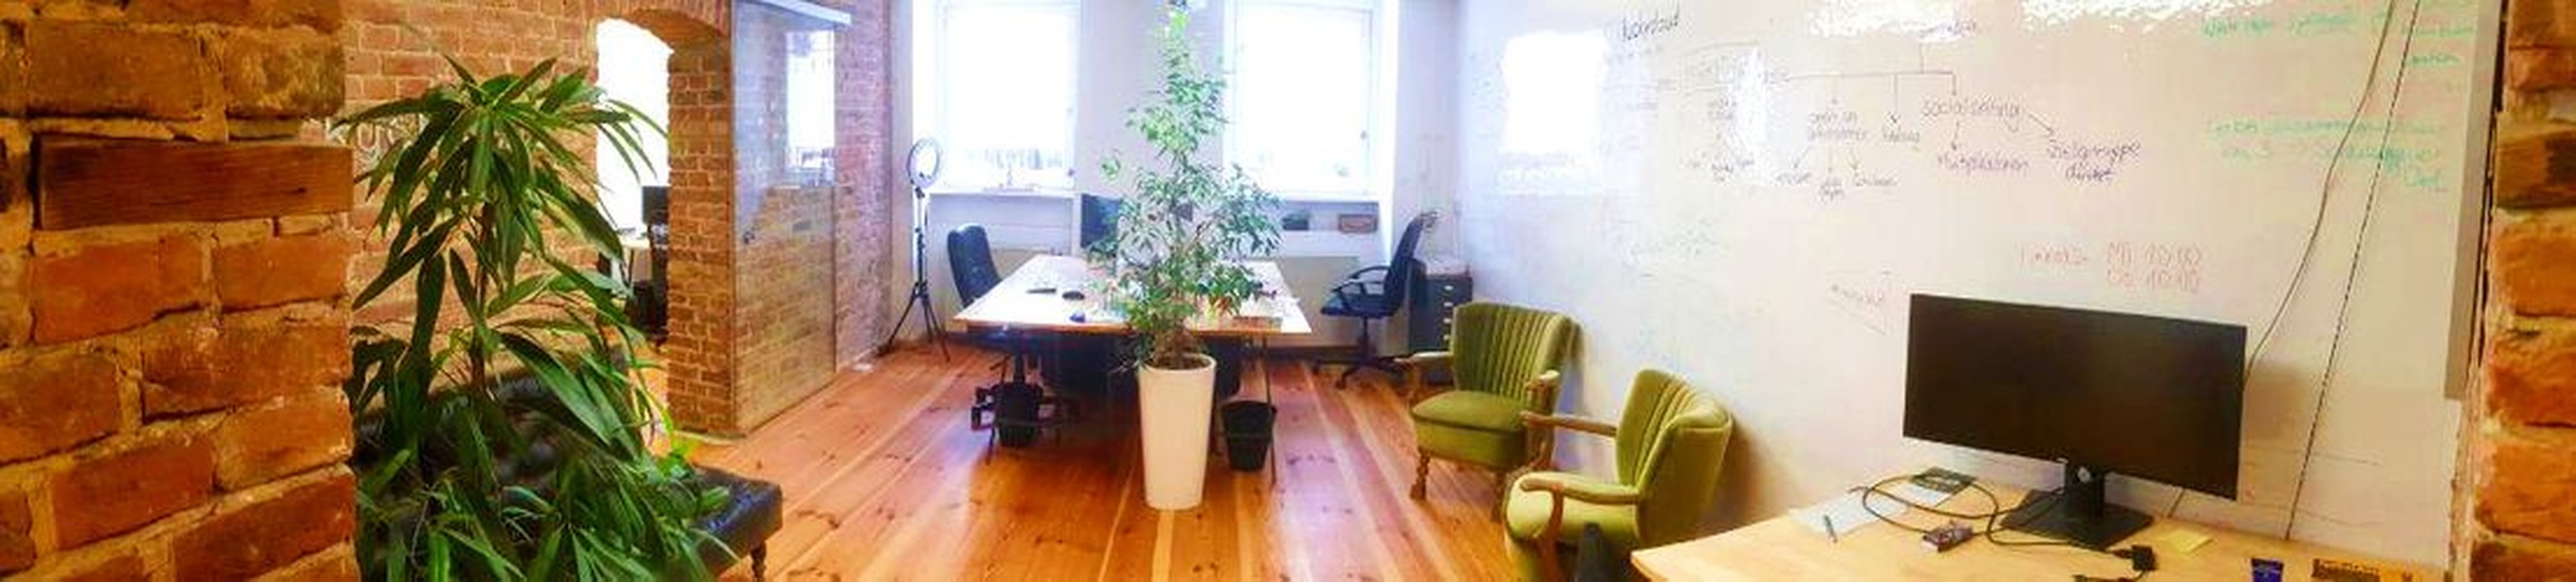 Büro-Traum im Bergmannkiez ### Office dream in Bergmannkiez ###